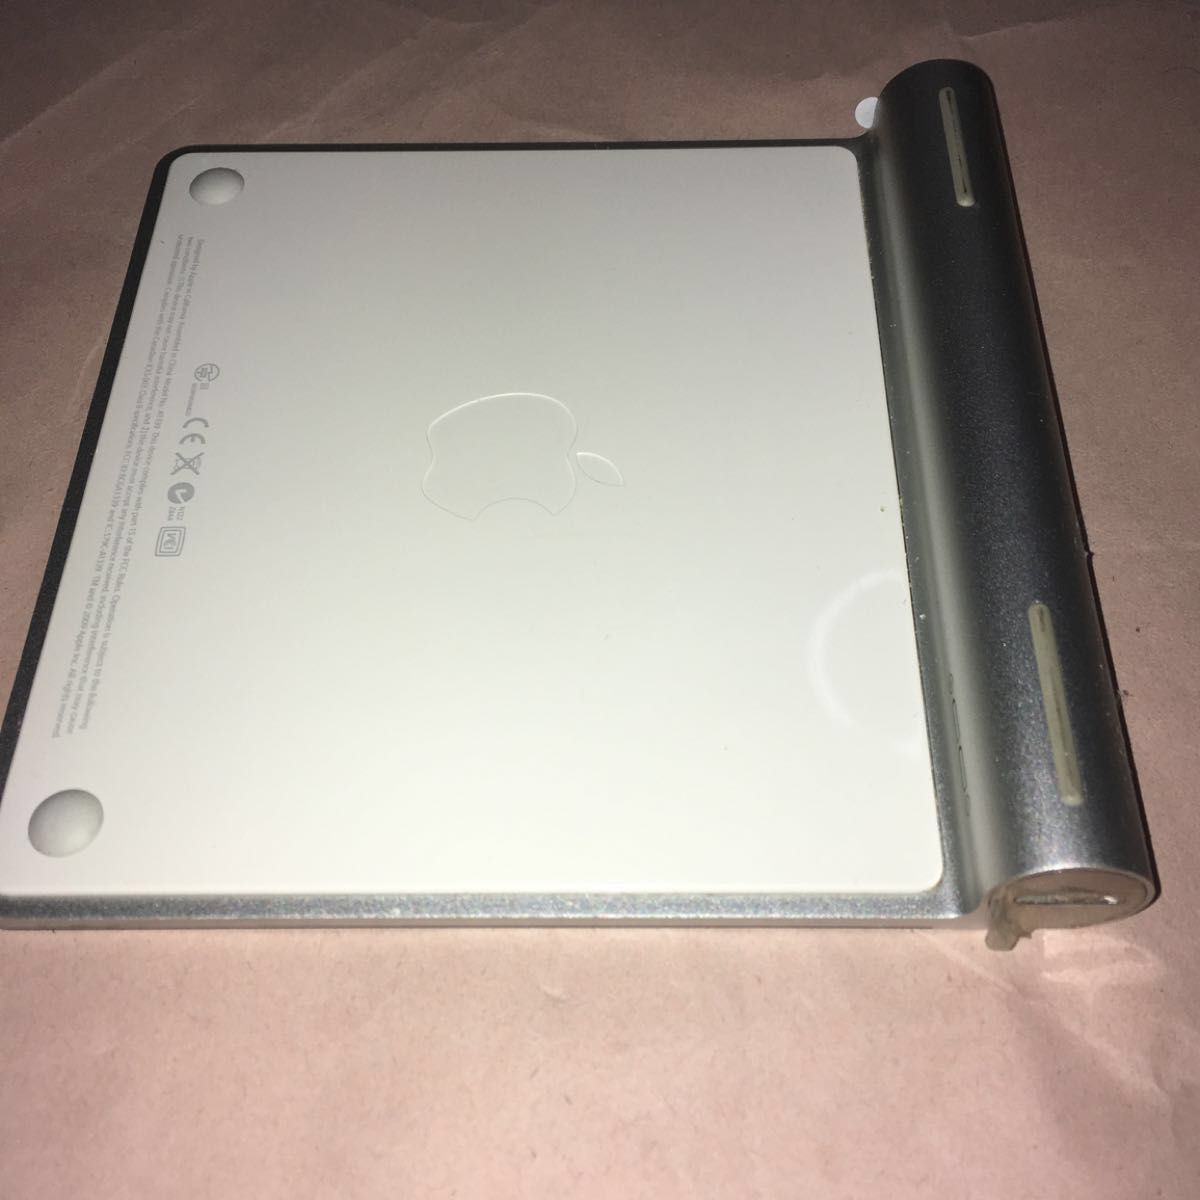 Apple MC380J/A Magic Trackpad ワイヤレス 乾電池式 元箱入り ジャンク